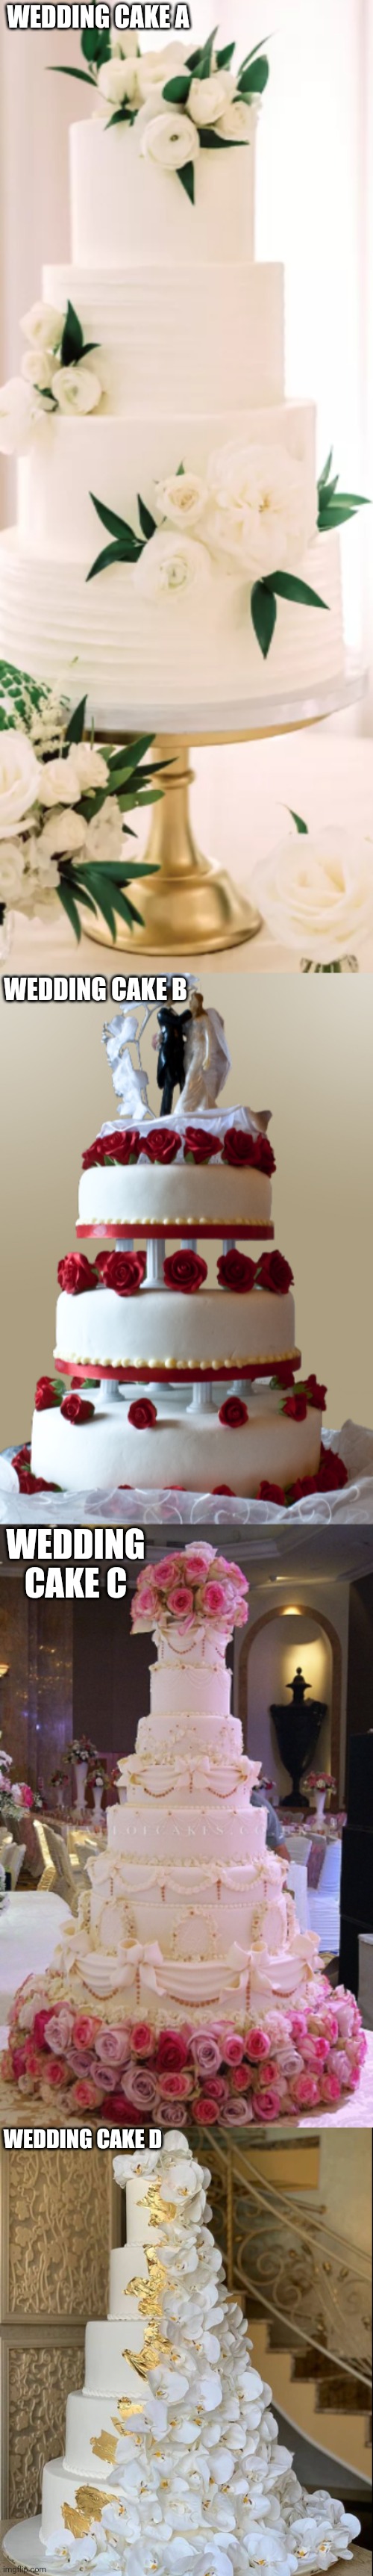 I'm Still Preparing For My Wedding (although the date is still unknown) |  WEDDING CAKE A; WEDDING CAKE B; WEDDING CAKE C; WEDDING CAKE D | made w/ Imgflip meme maker